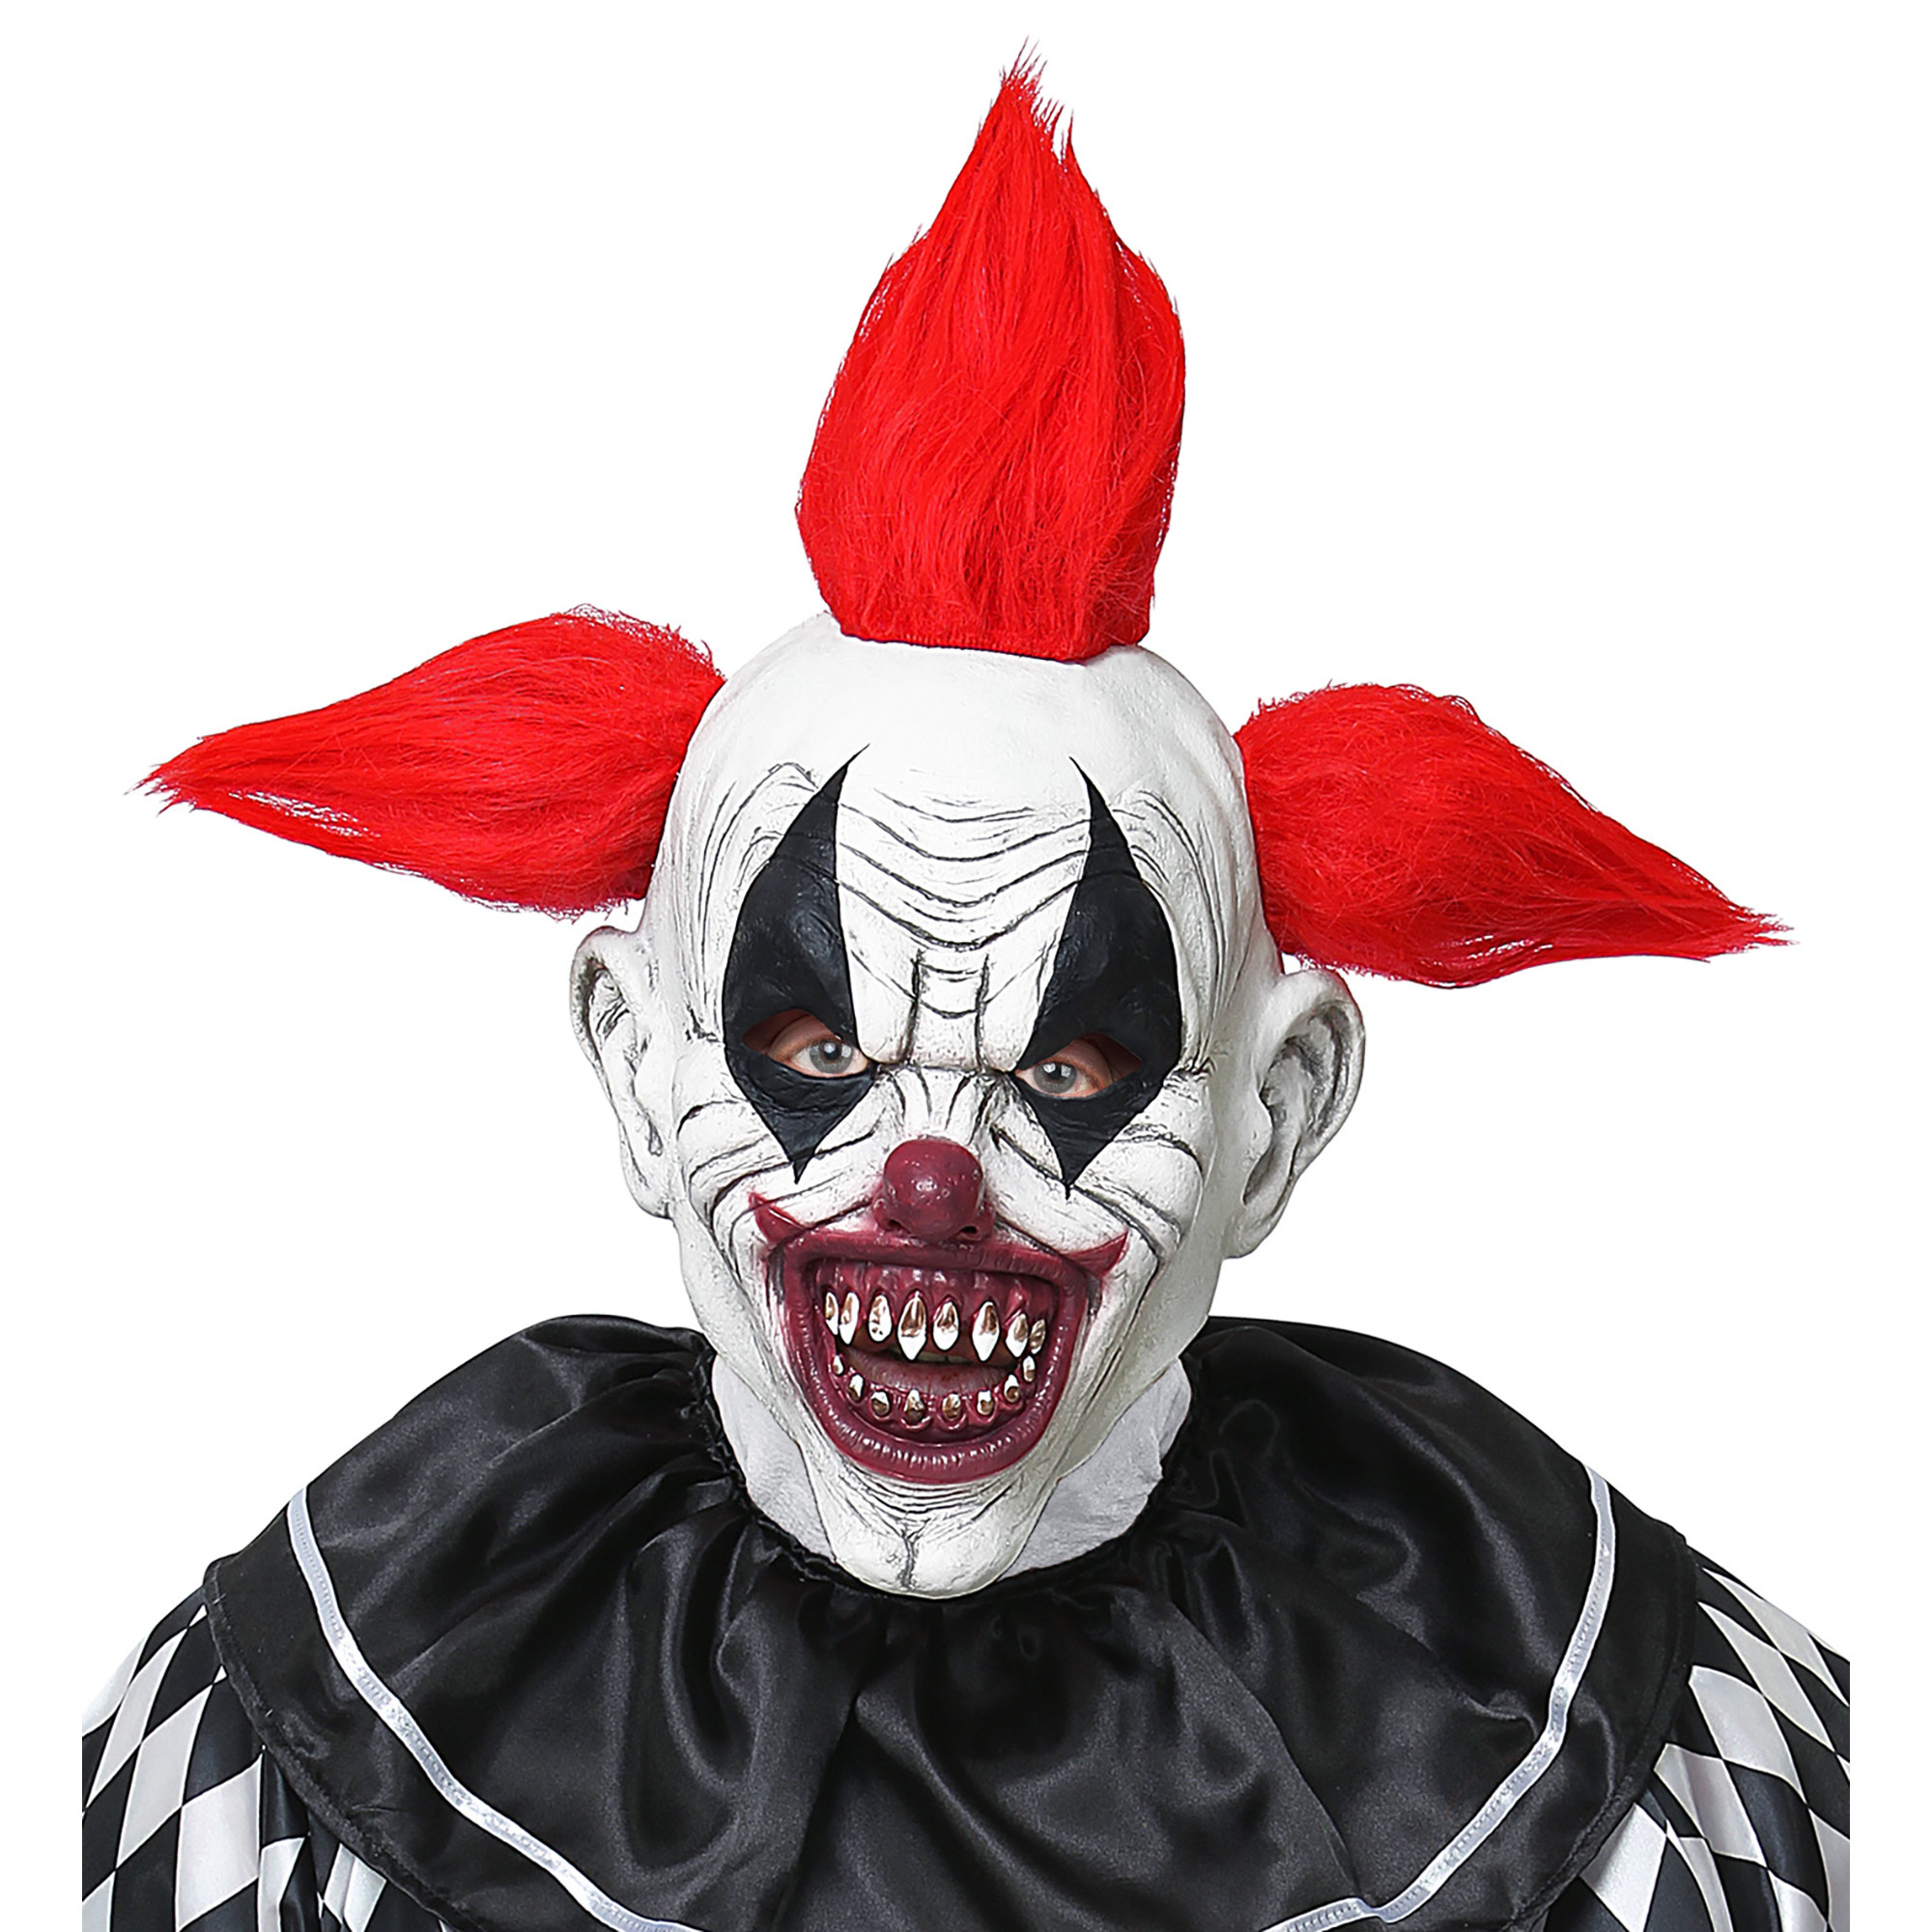 Afschrikwekkende scary horror clownsmasker met raar rood haar